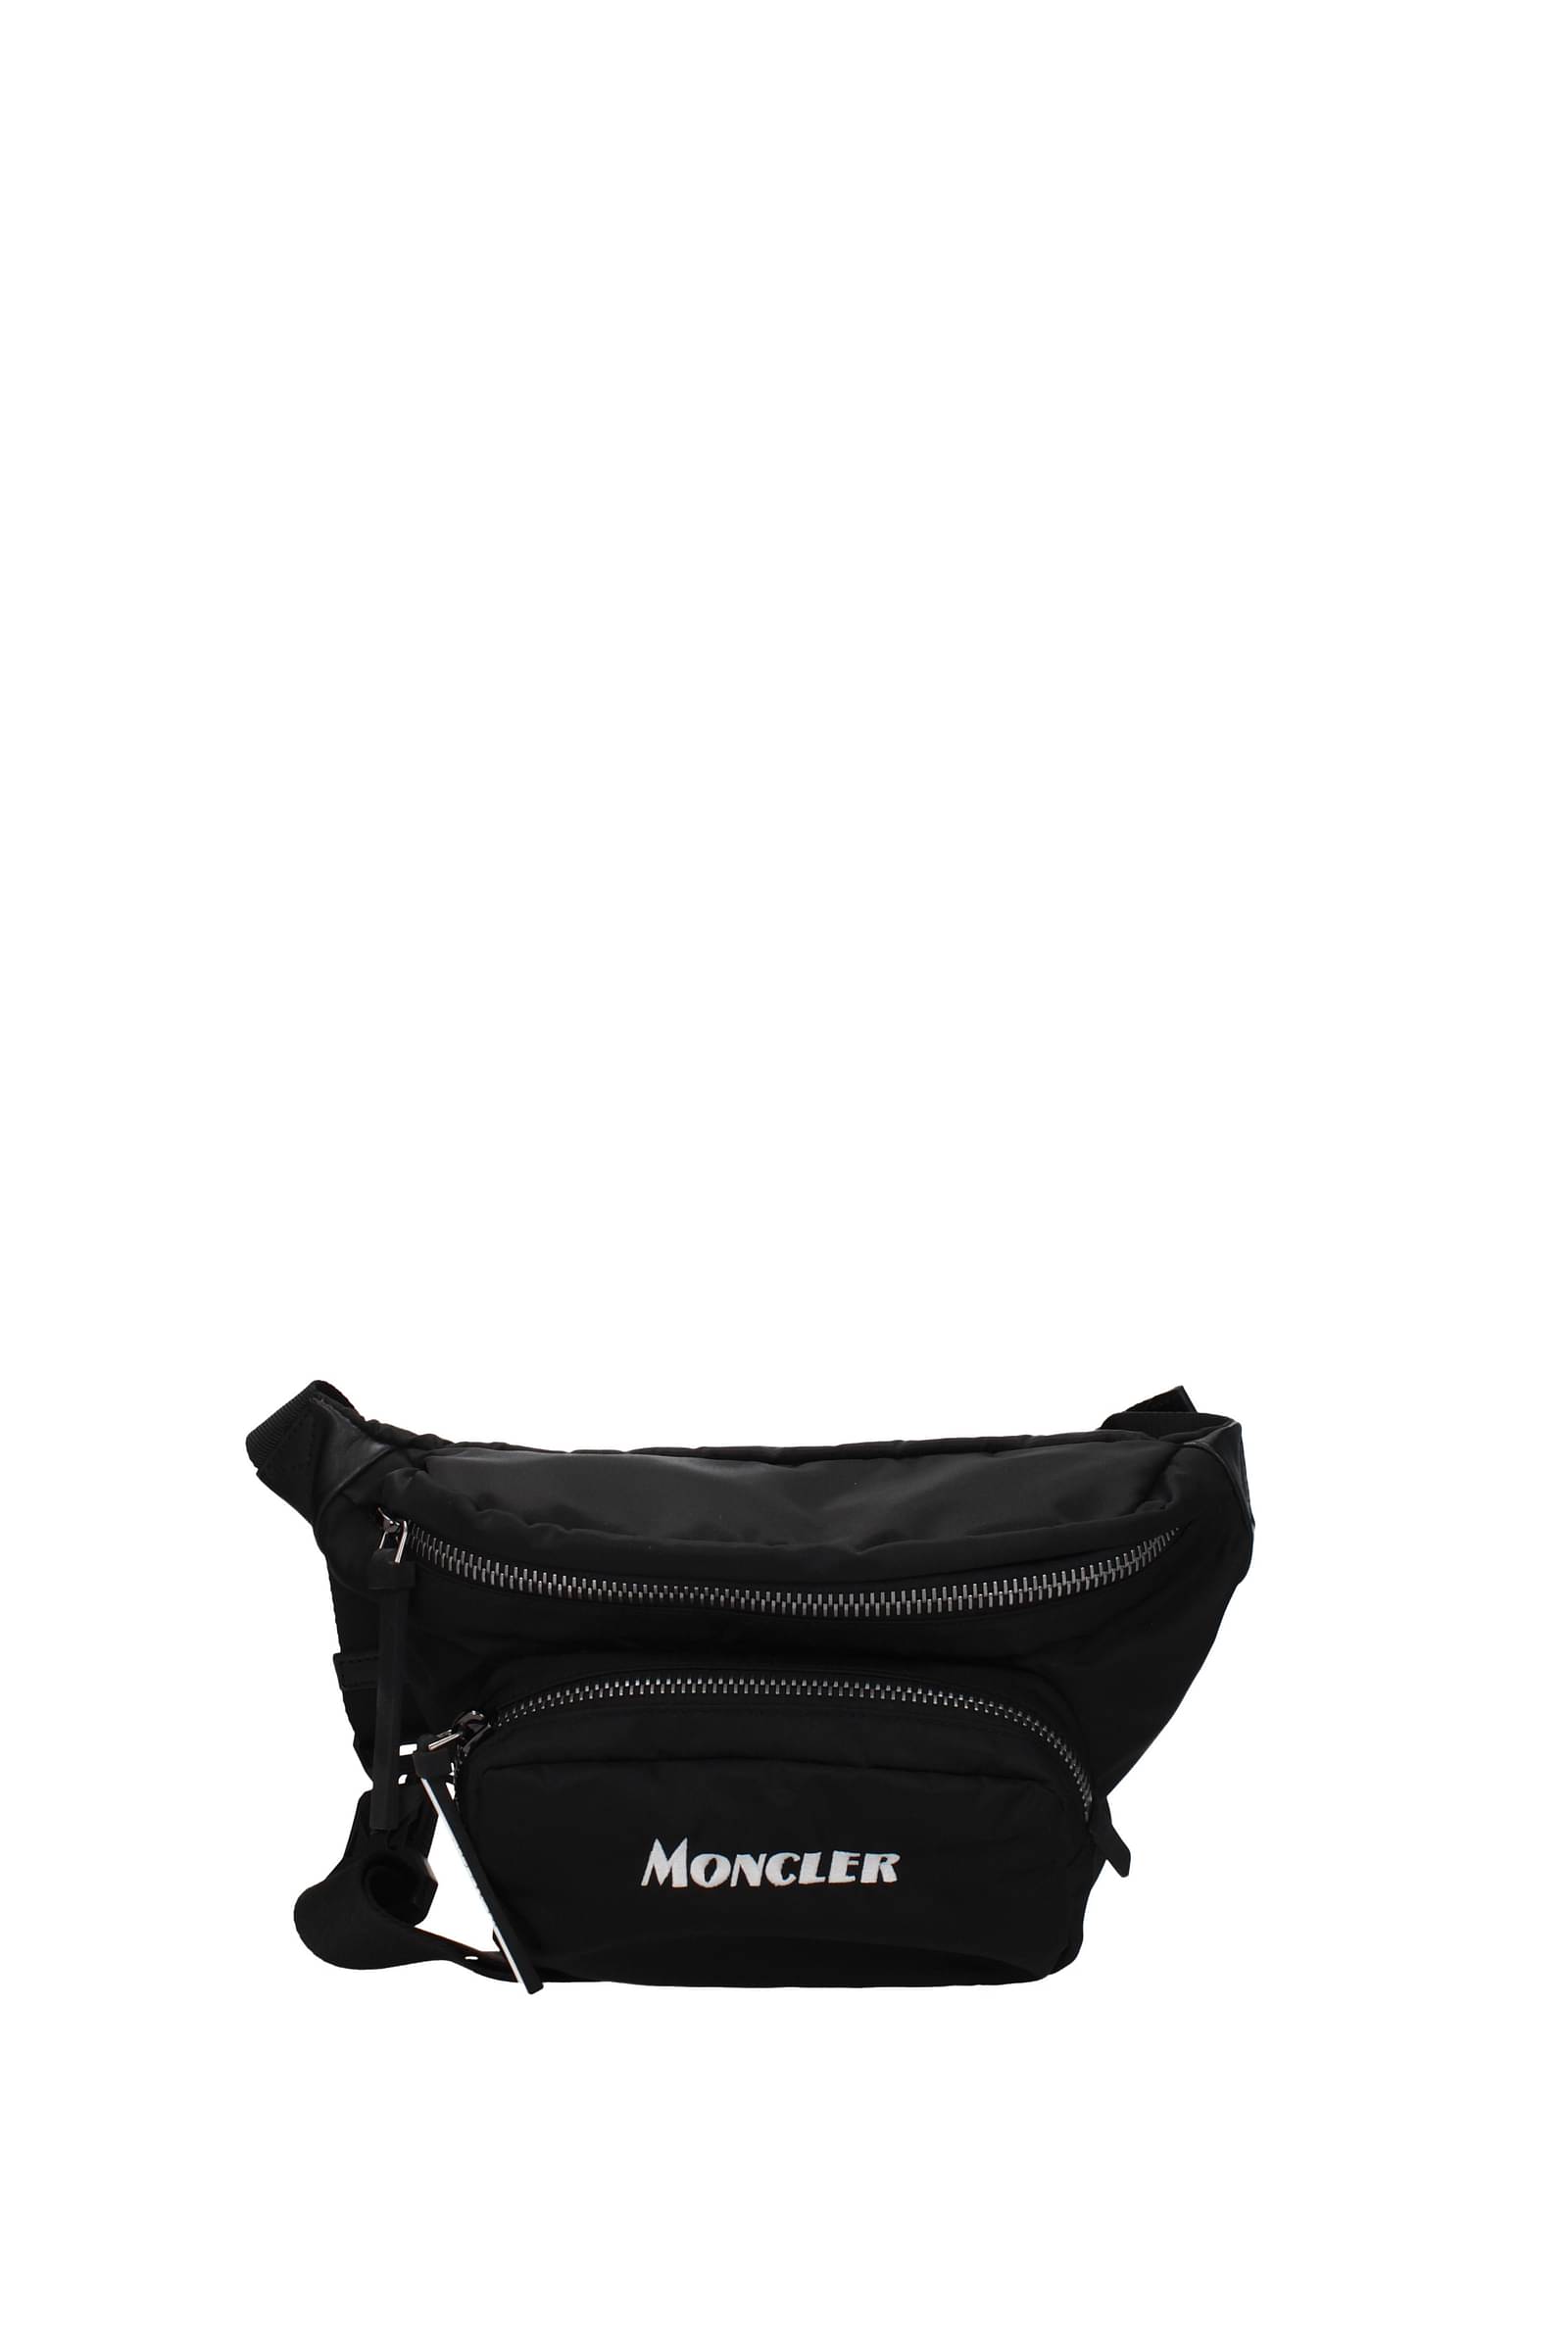 Black Backpack - Moncler x adidas Originals for Genius | Moncler HK